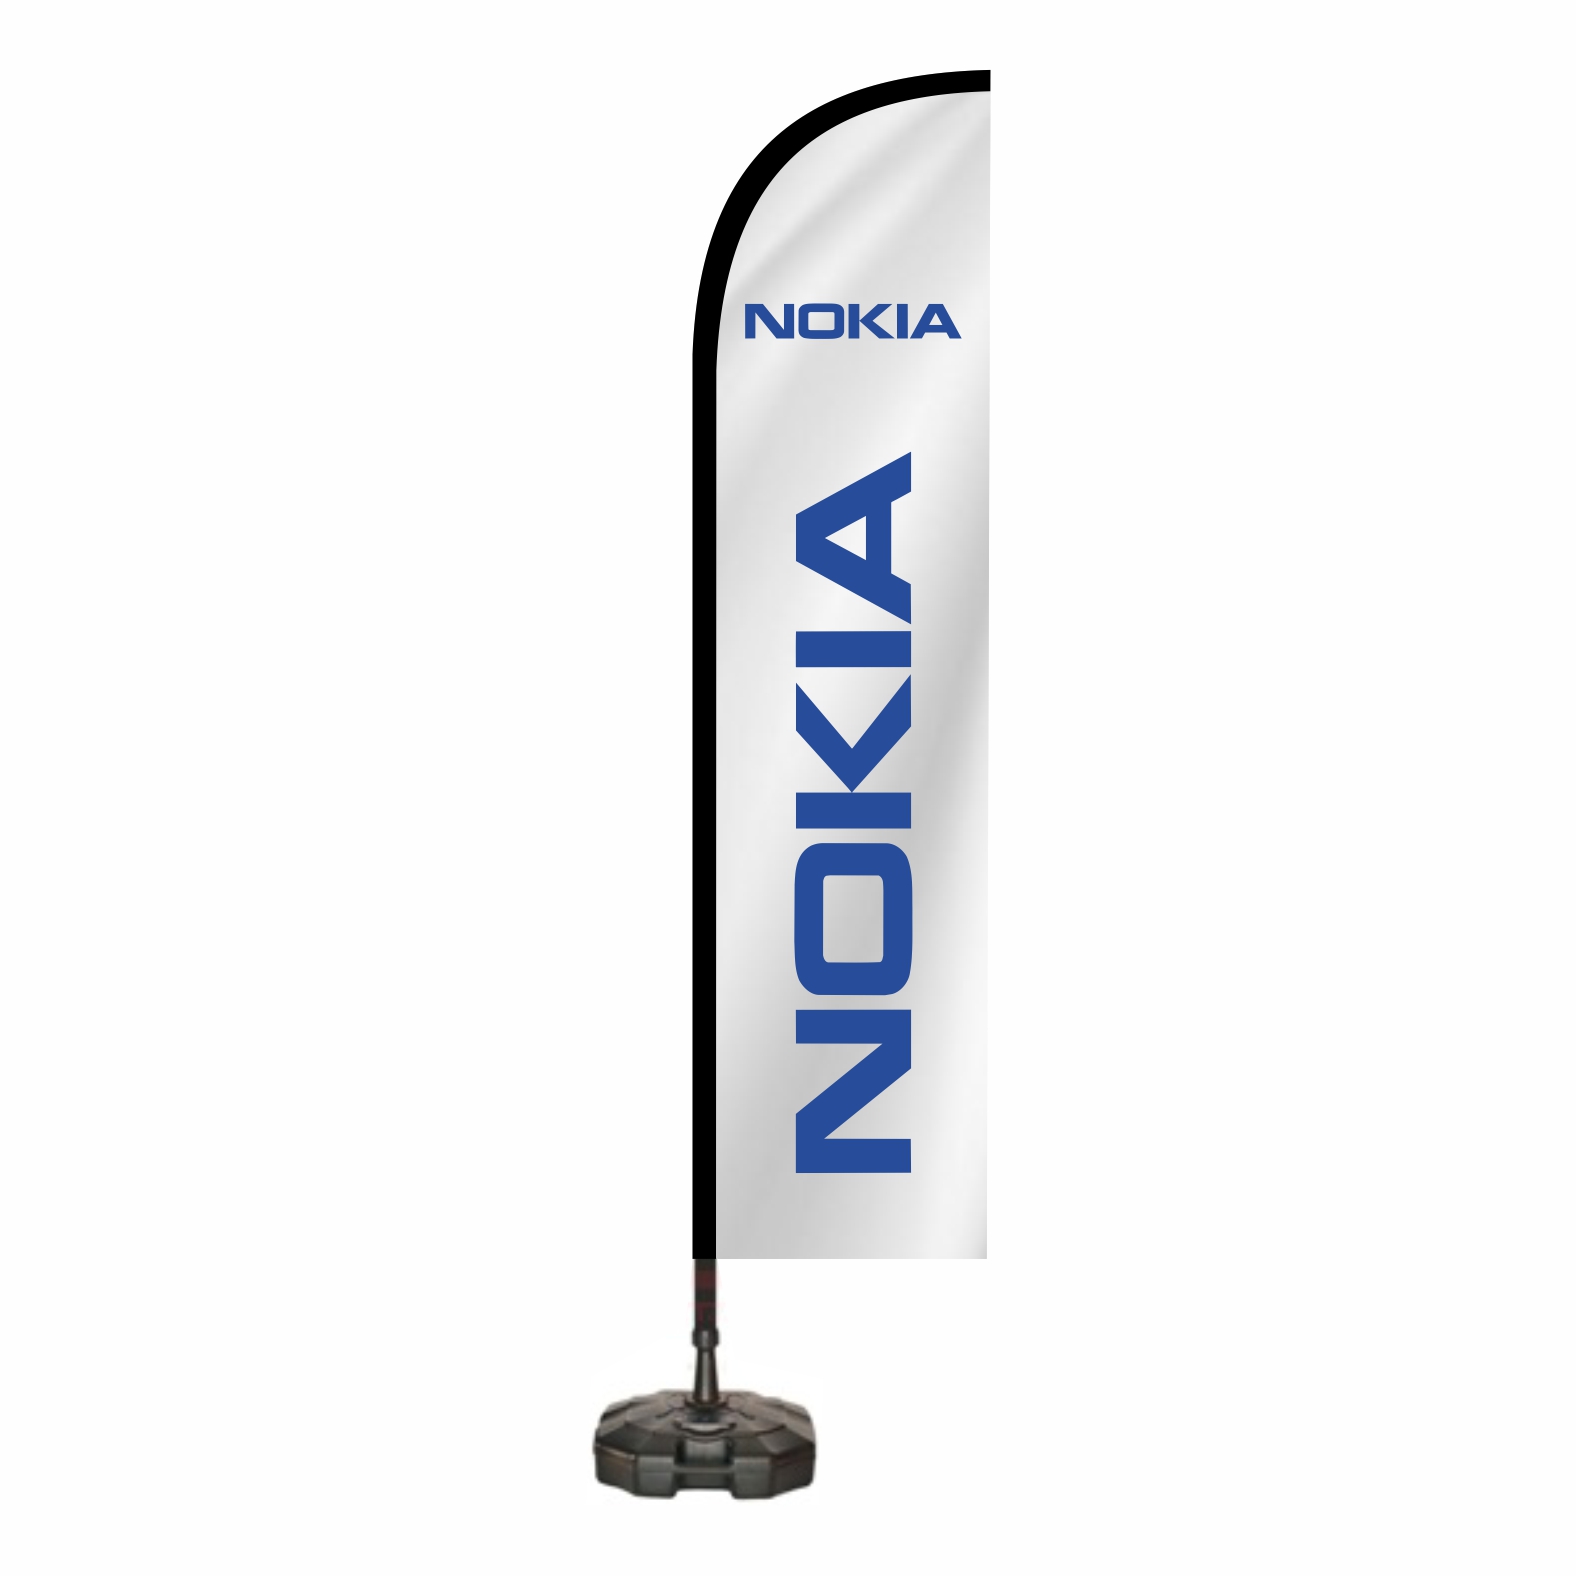 Nokia Reklam Bayra Ne Demek